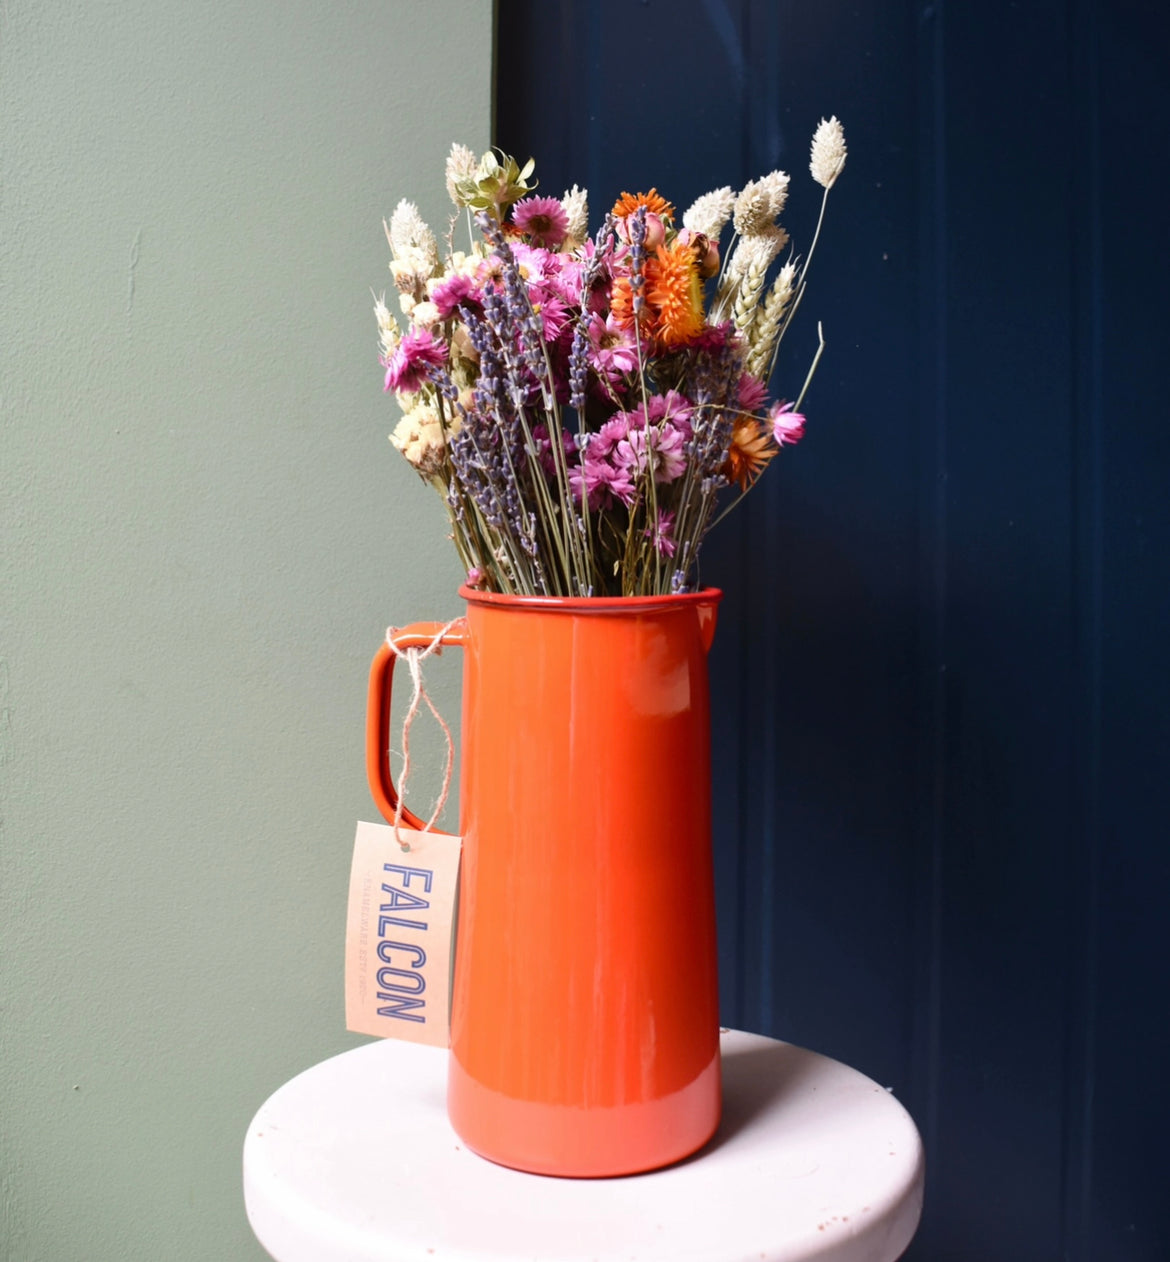 Enamel 3 pint jug - Red/orange - The Bristol Artisan Handmade Sustainable Gifts and Homewares.